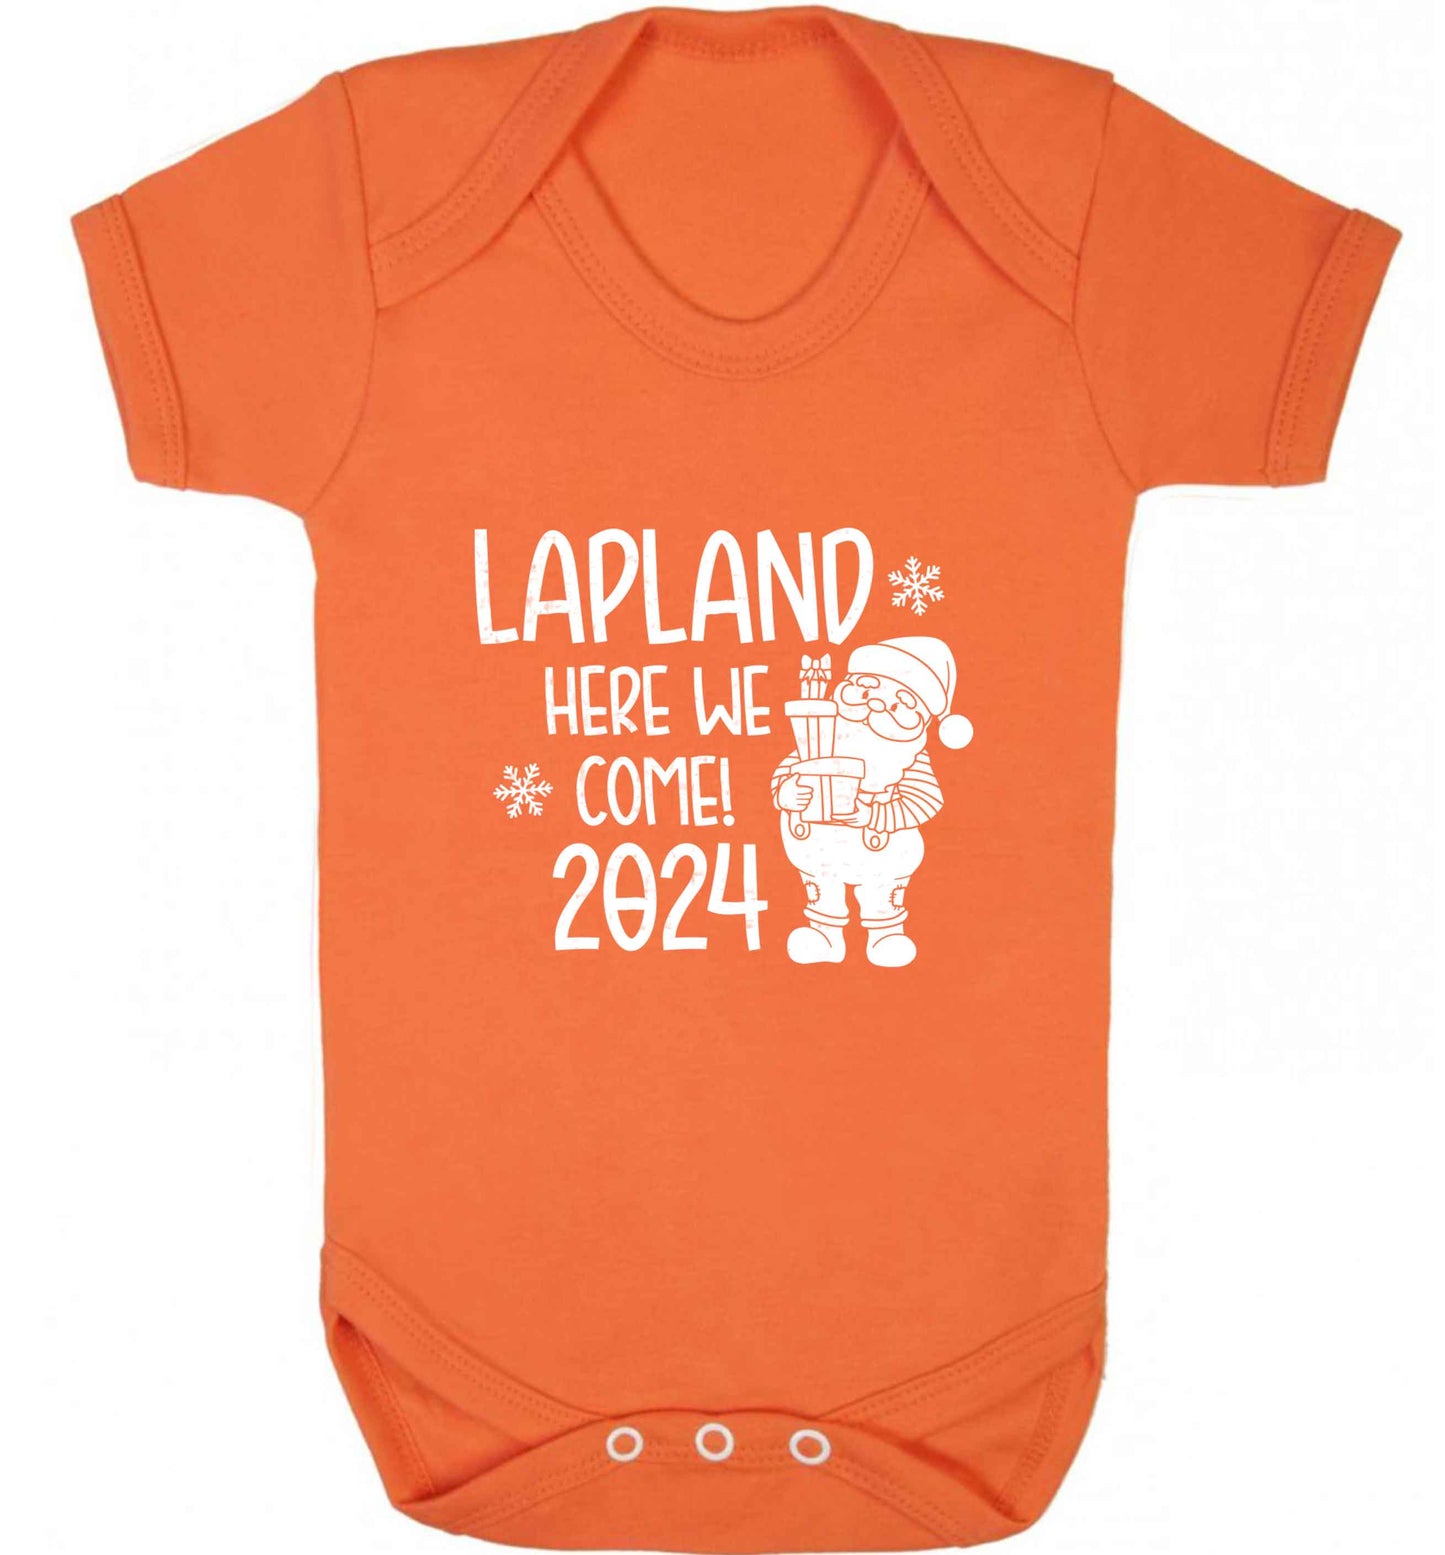 Lapland here we come baby vest orange 18-24 months